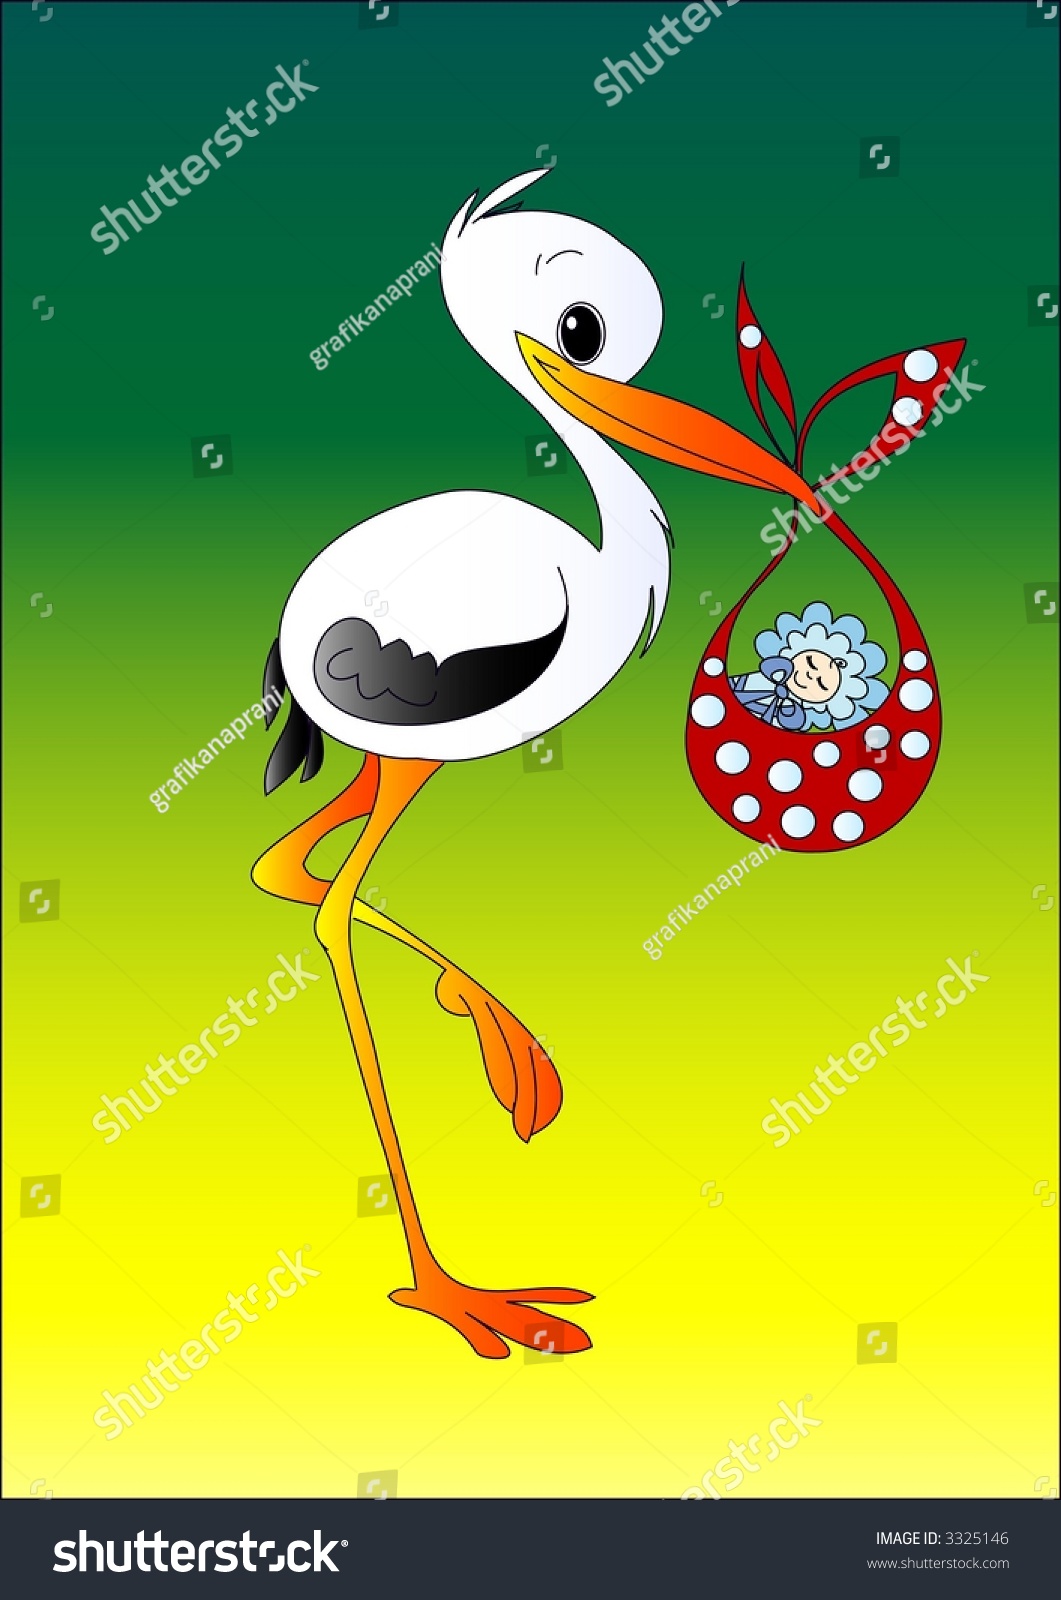 Stork Delivering Baby Boy, Vector - 3325146 : Shutterstock